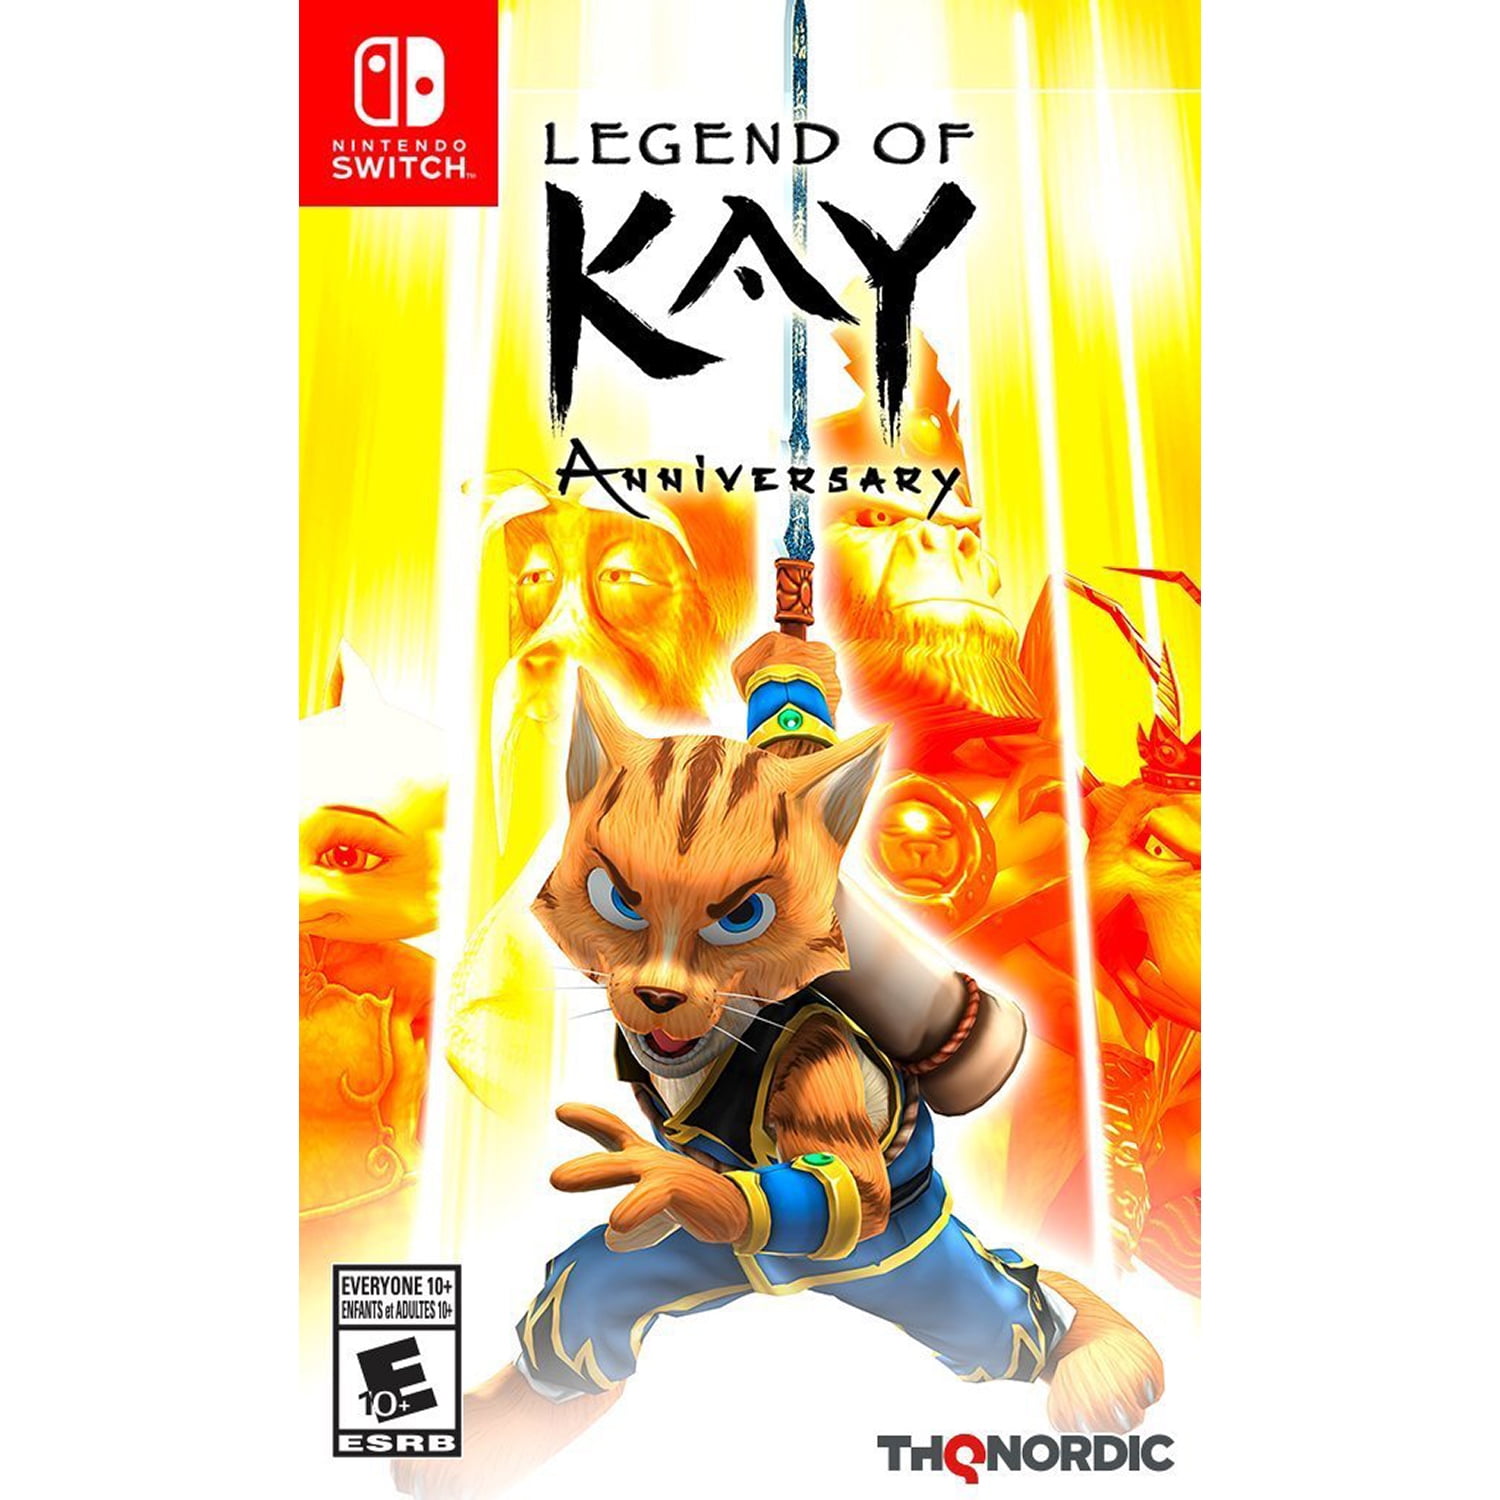 Legend of Kay: Anniversary, THQ-Nordic, Nintendo Switch, 811994021564